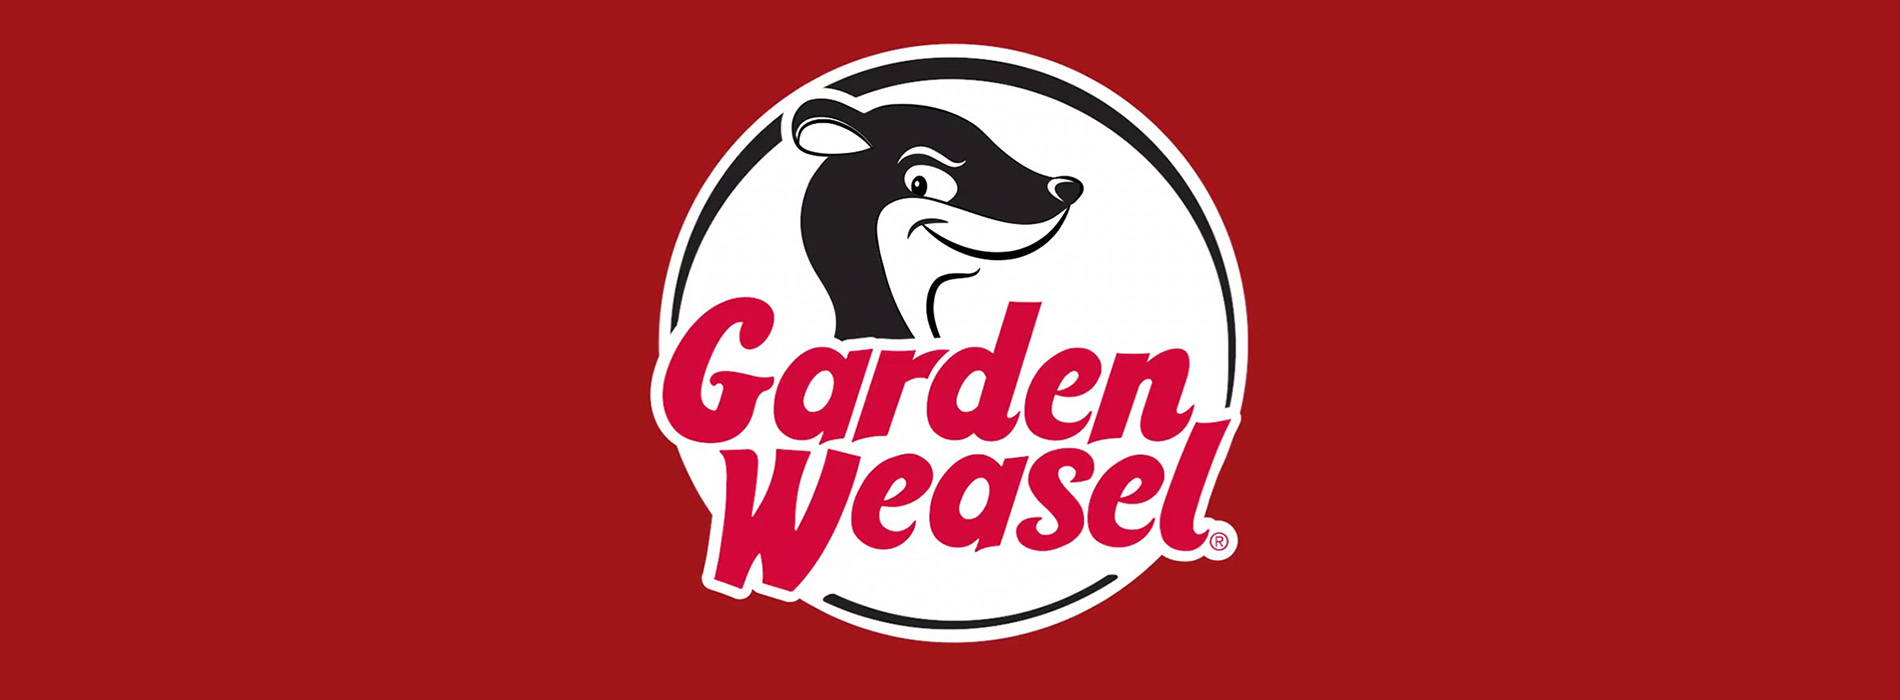 Since 1975, The Garden Weasel Story